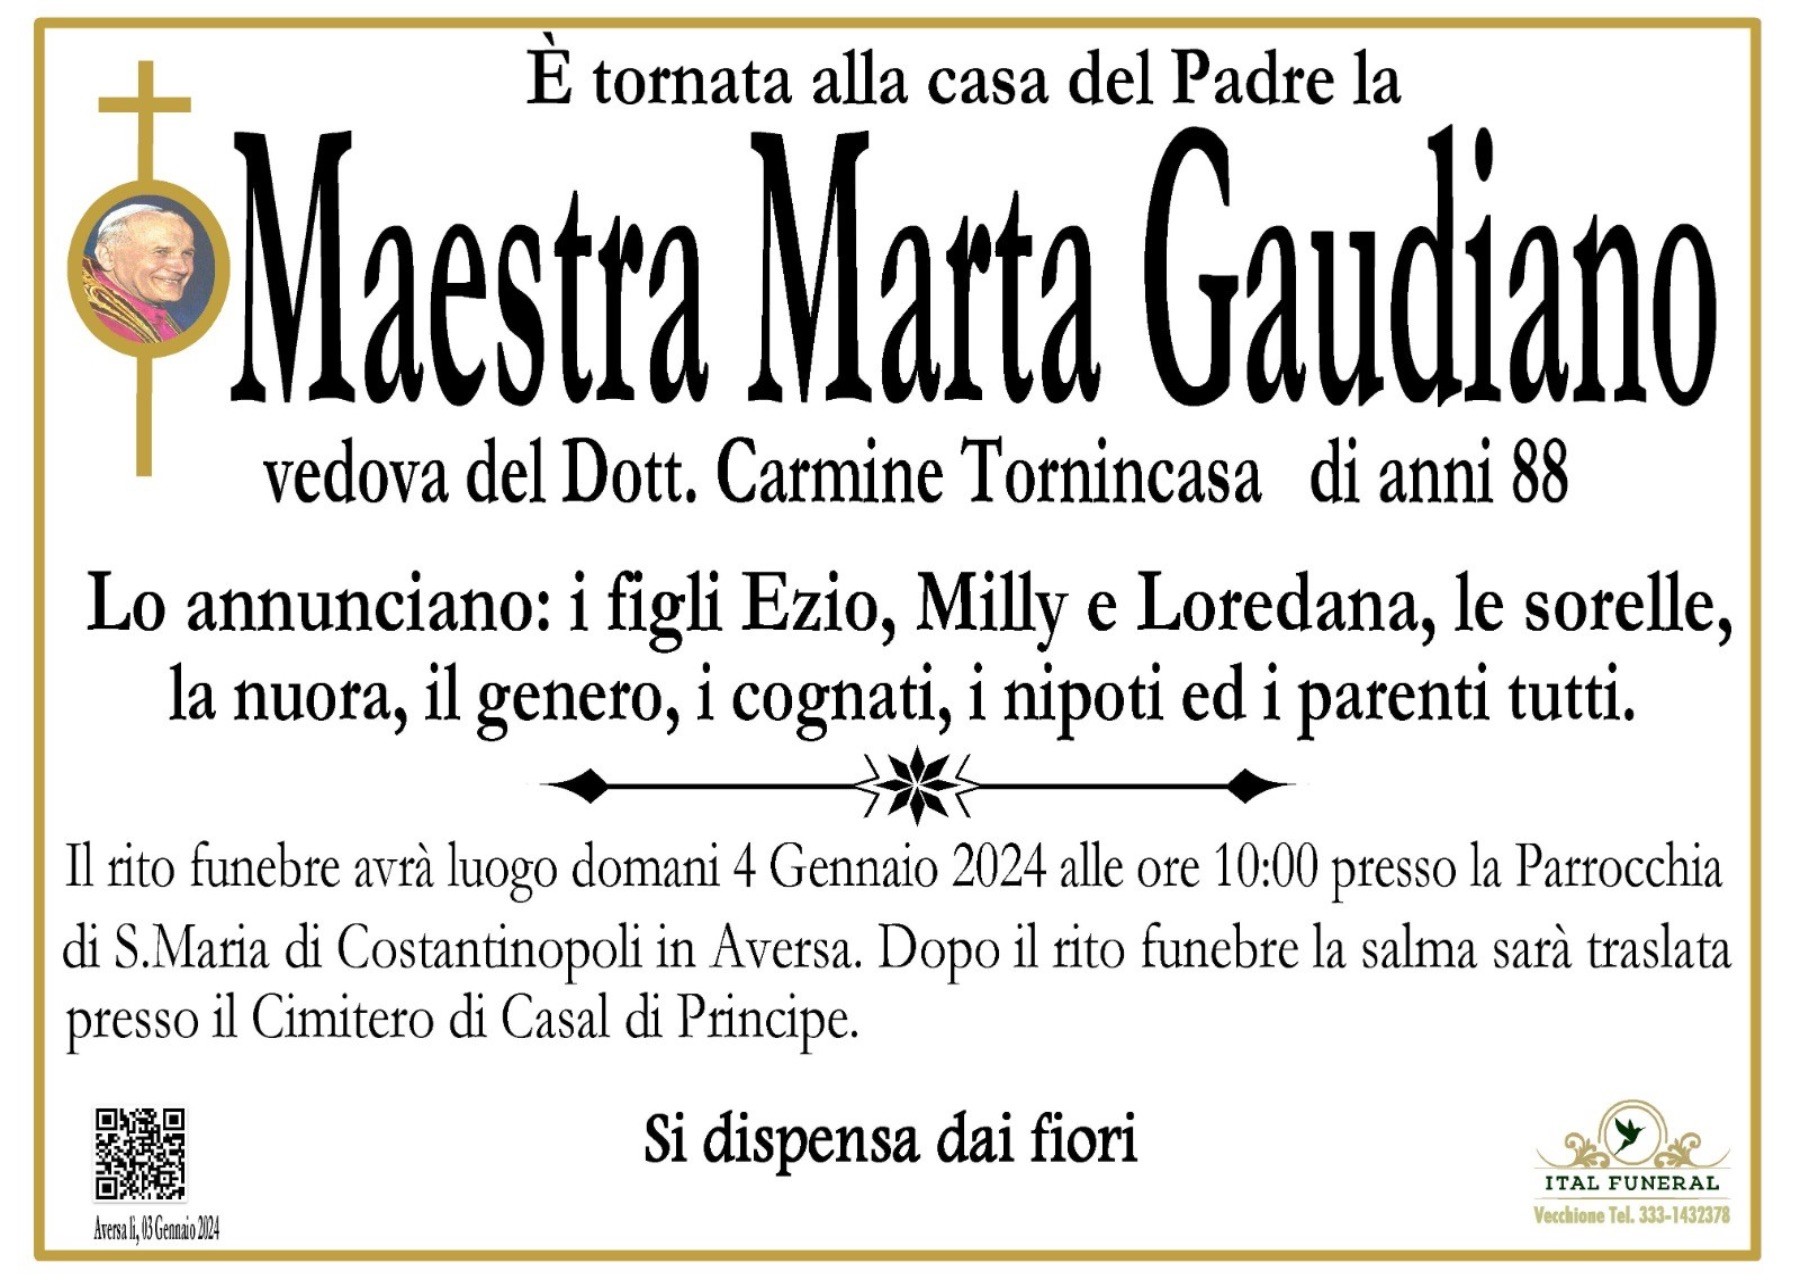 Maestra Marta Gaudiano